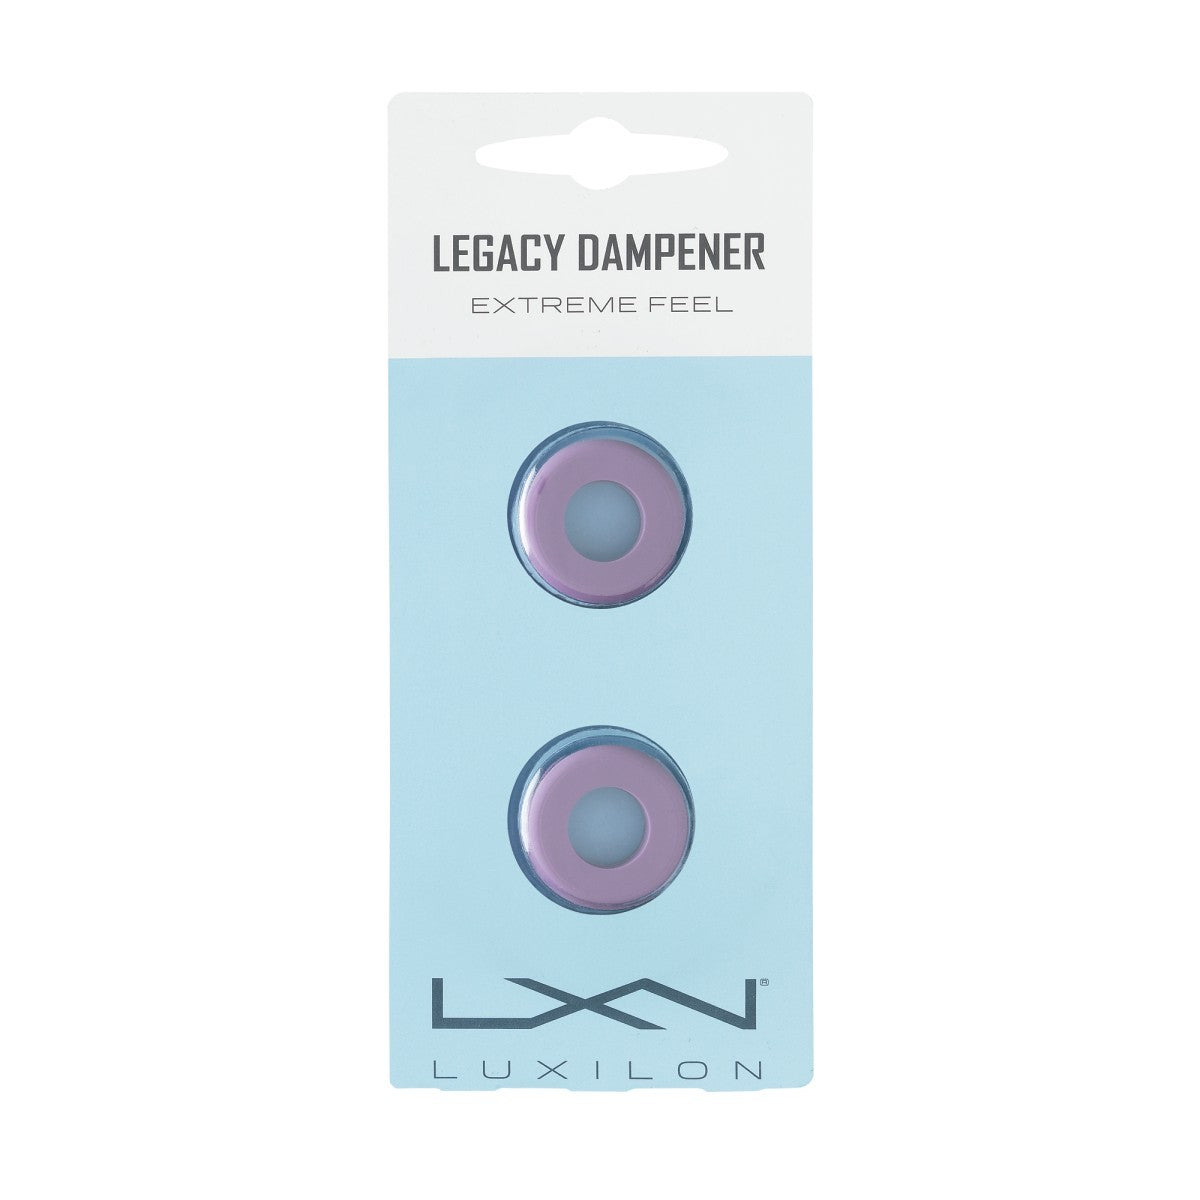 Wilson Luxilon Legacy Black Legacy Dampener - atr-sports